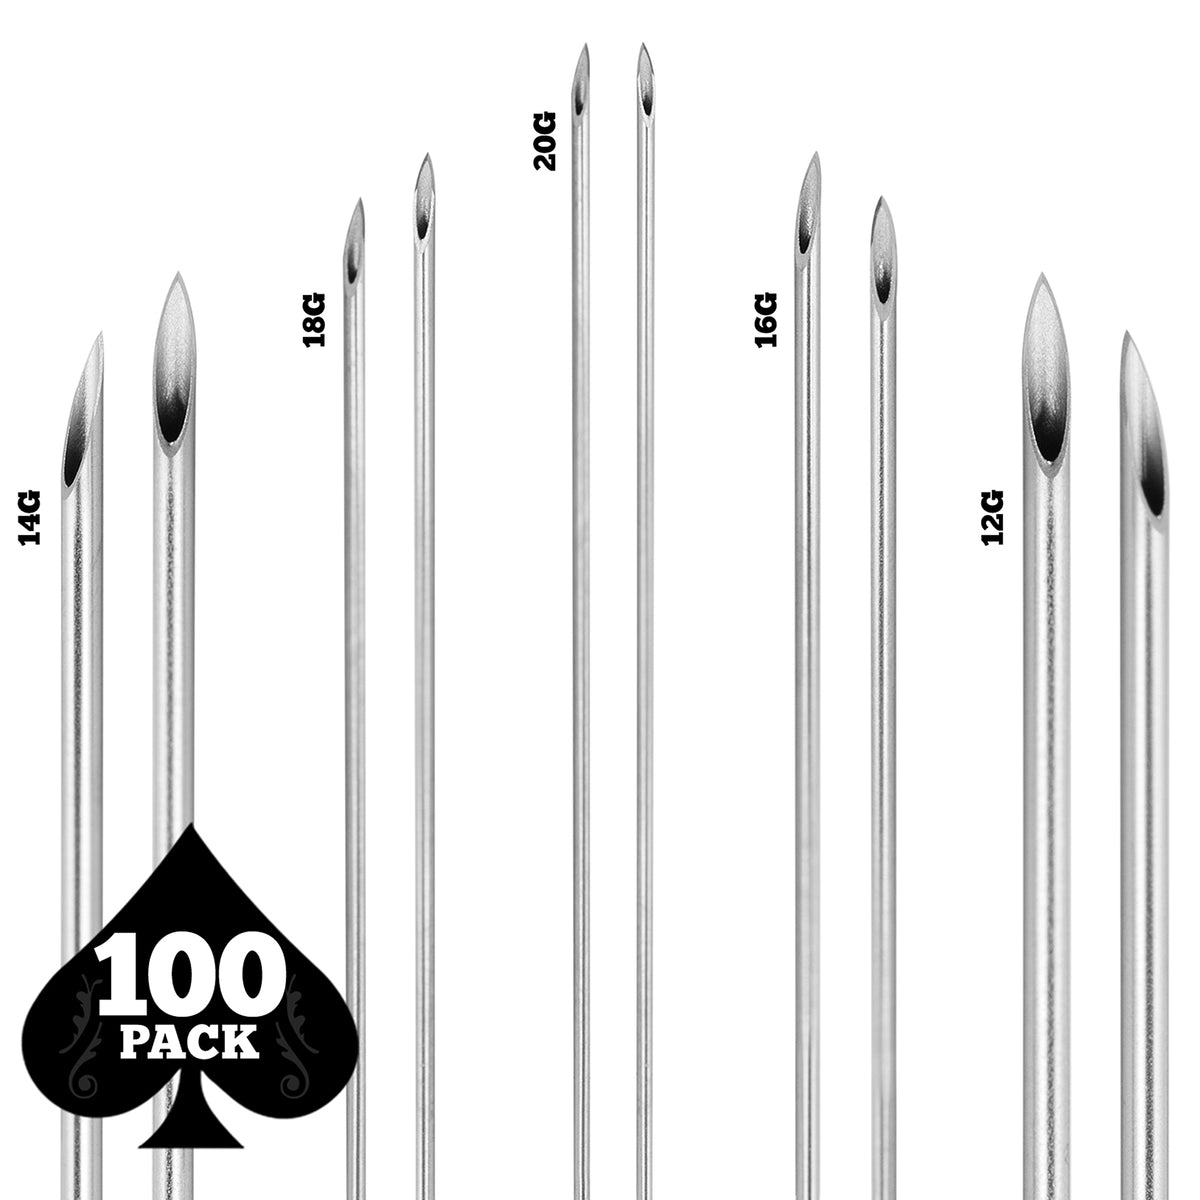 100pcs Piercing Needles Mixed 12g 14g 16g 18g 20g Sterile